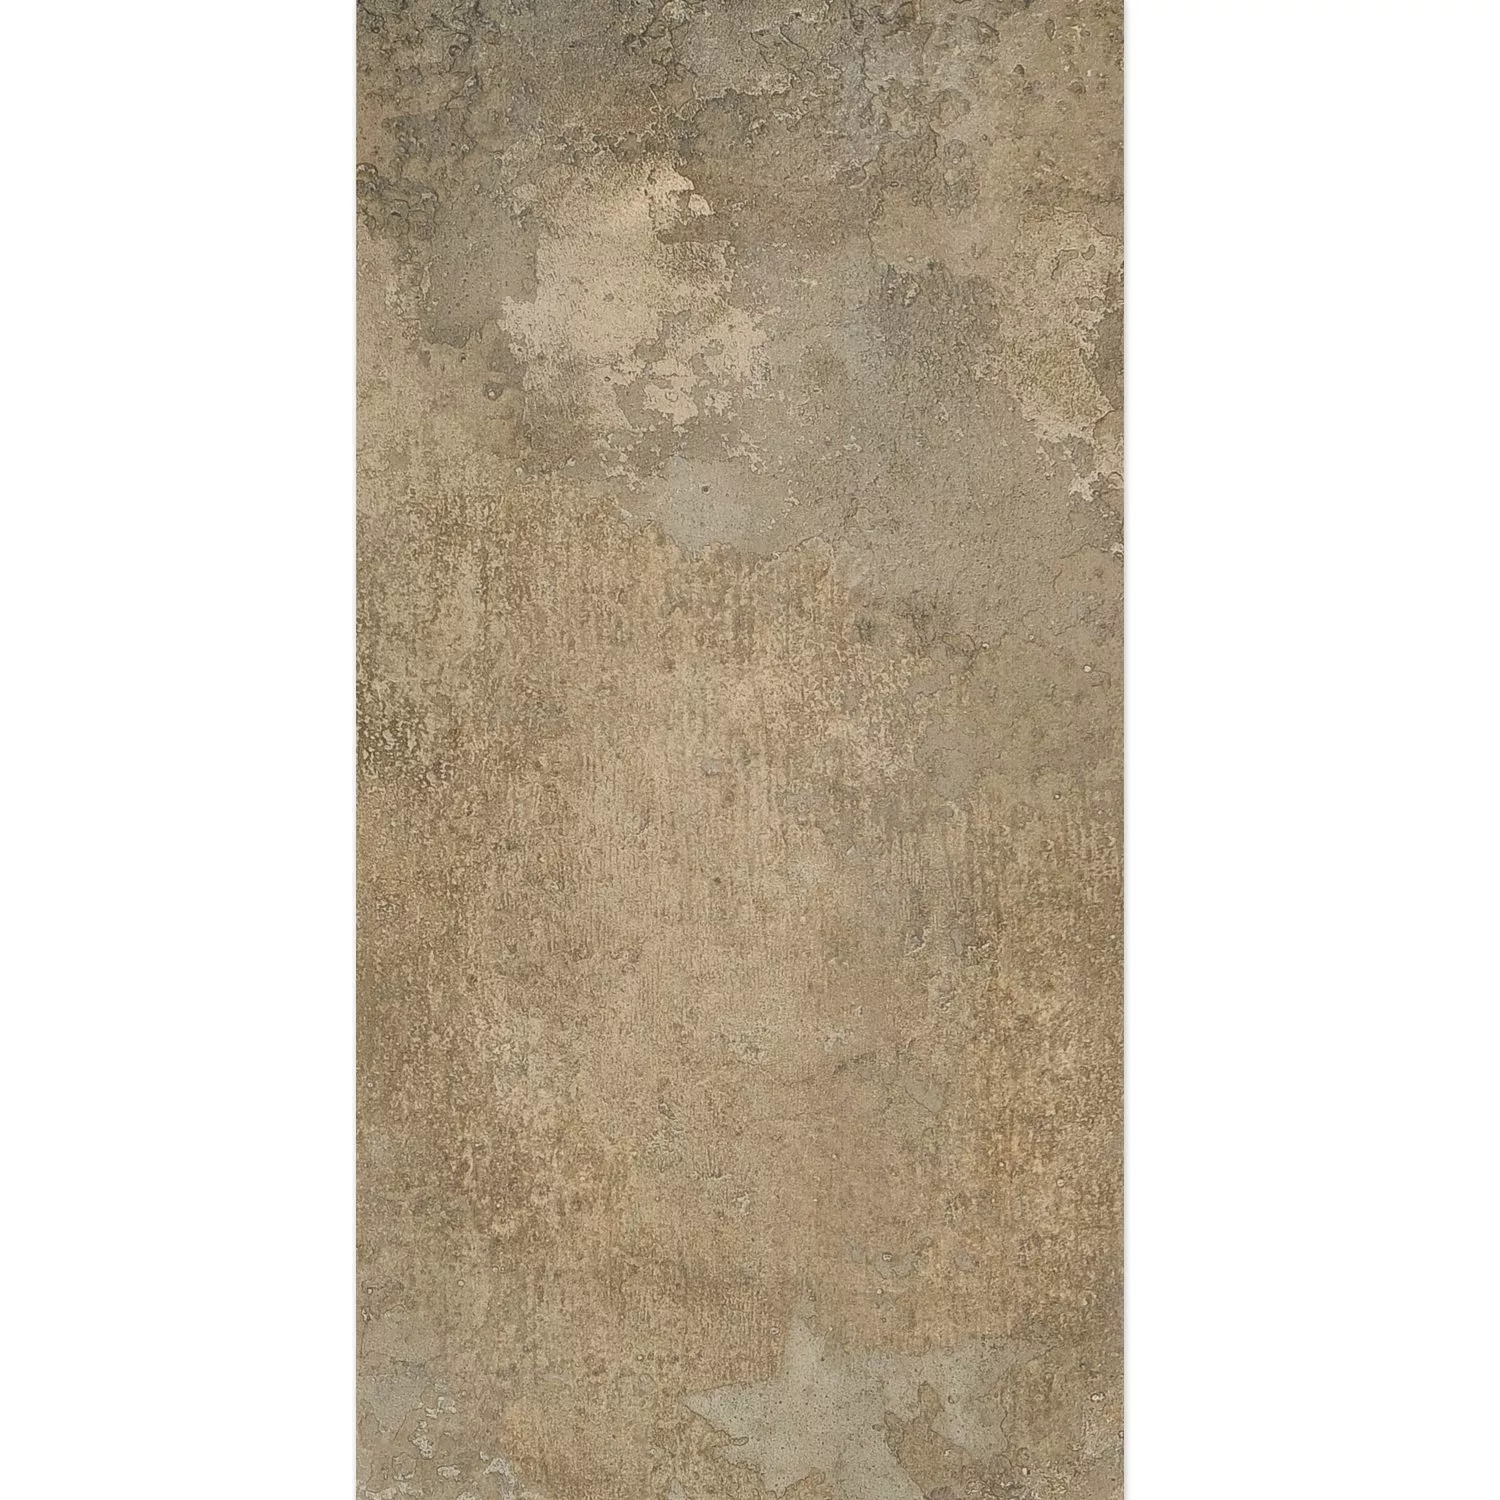 Vzorek Podlahové Dlaždice Haarlem Hnědá 45x90cm